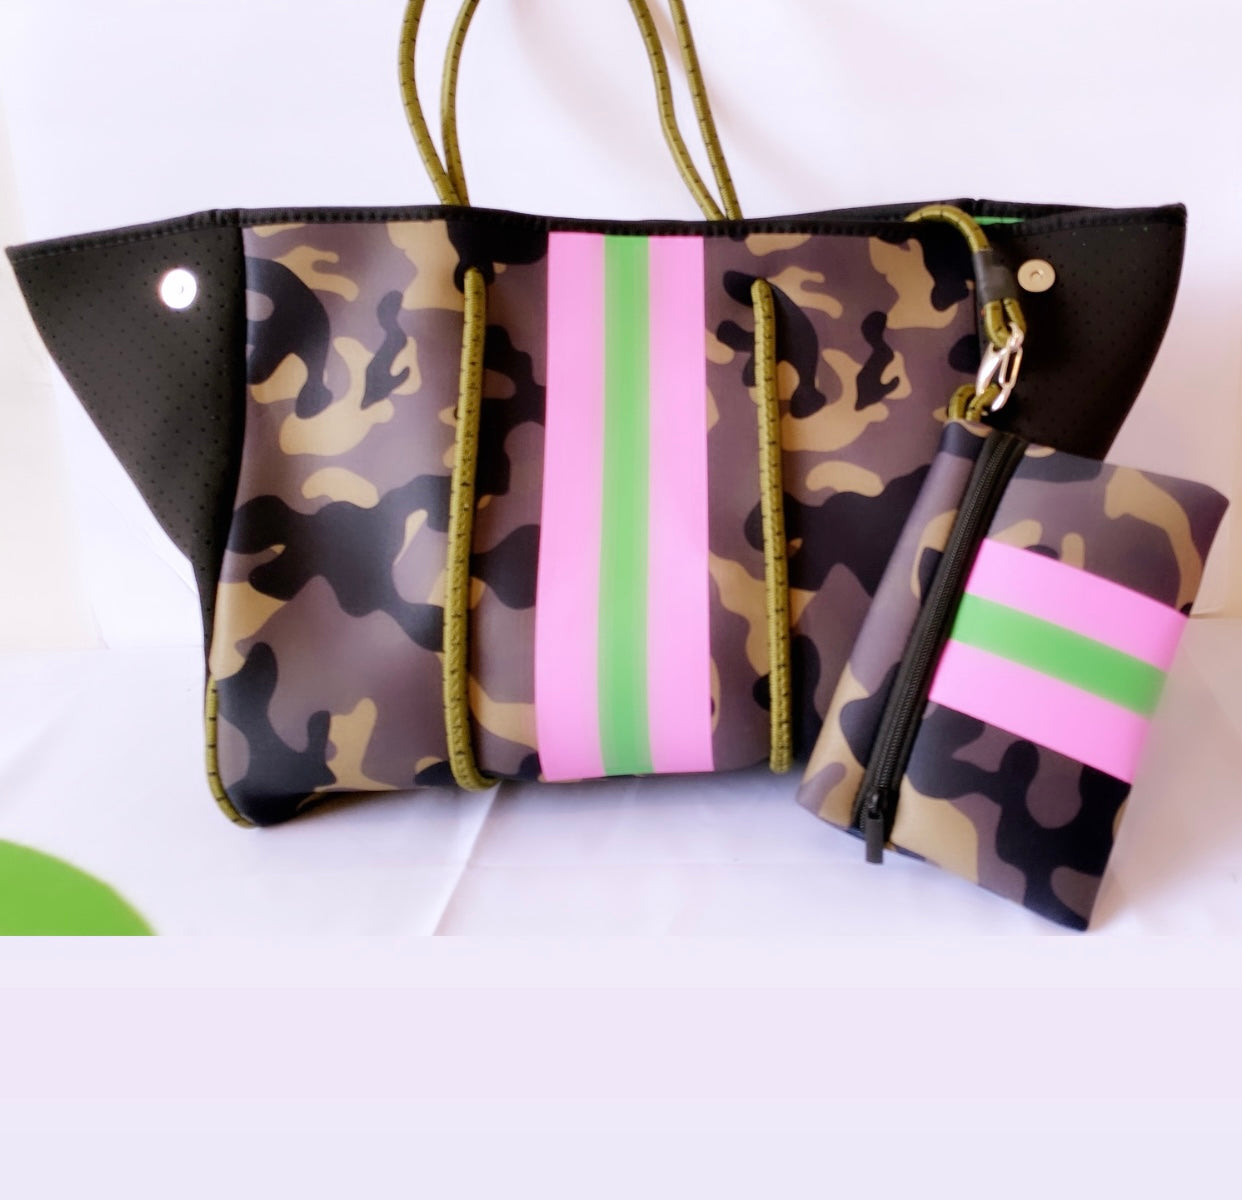 Neoprene Camo Tote Bag Purse Pink Orange Stripe in Gray or Green for Beach, Gym, Travel Green Camo